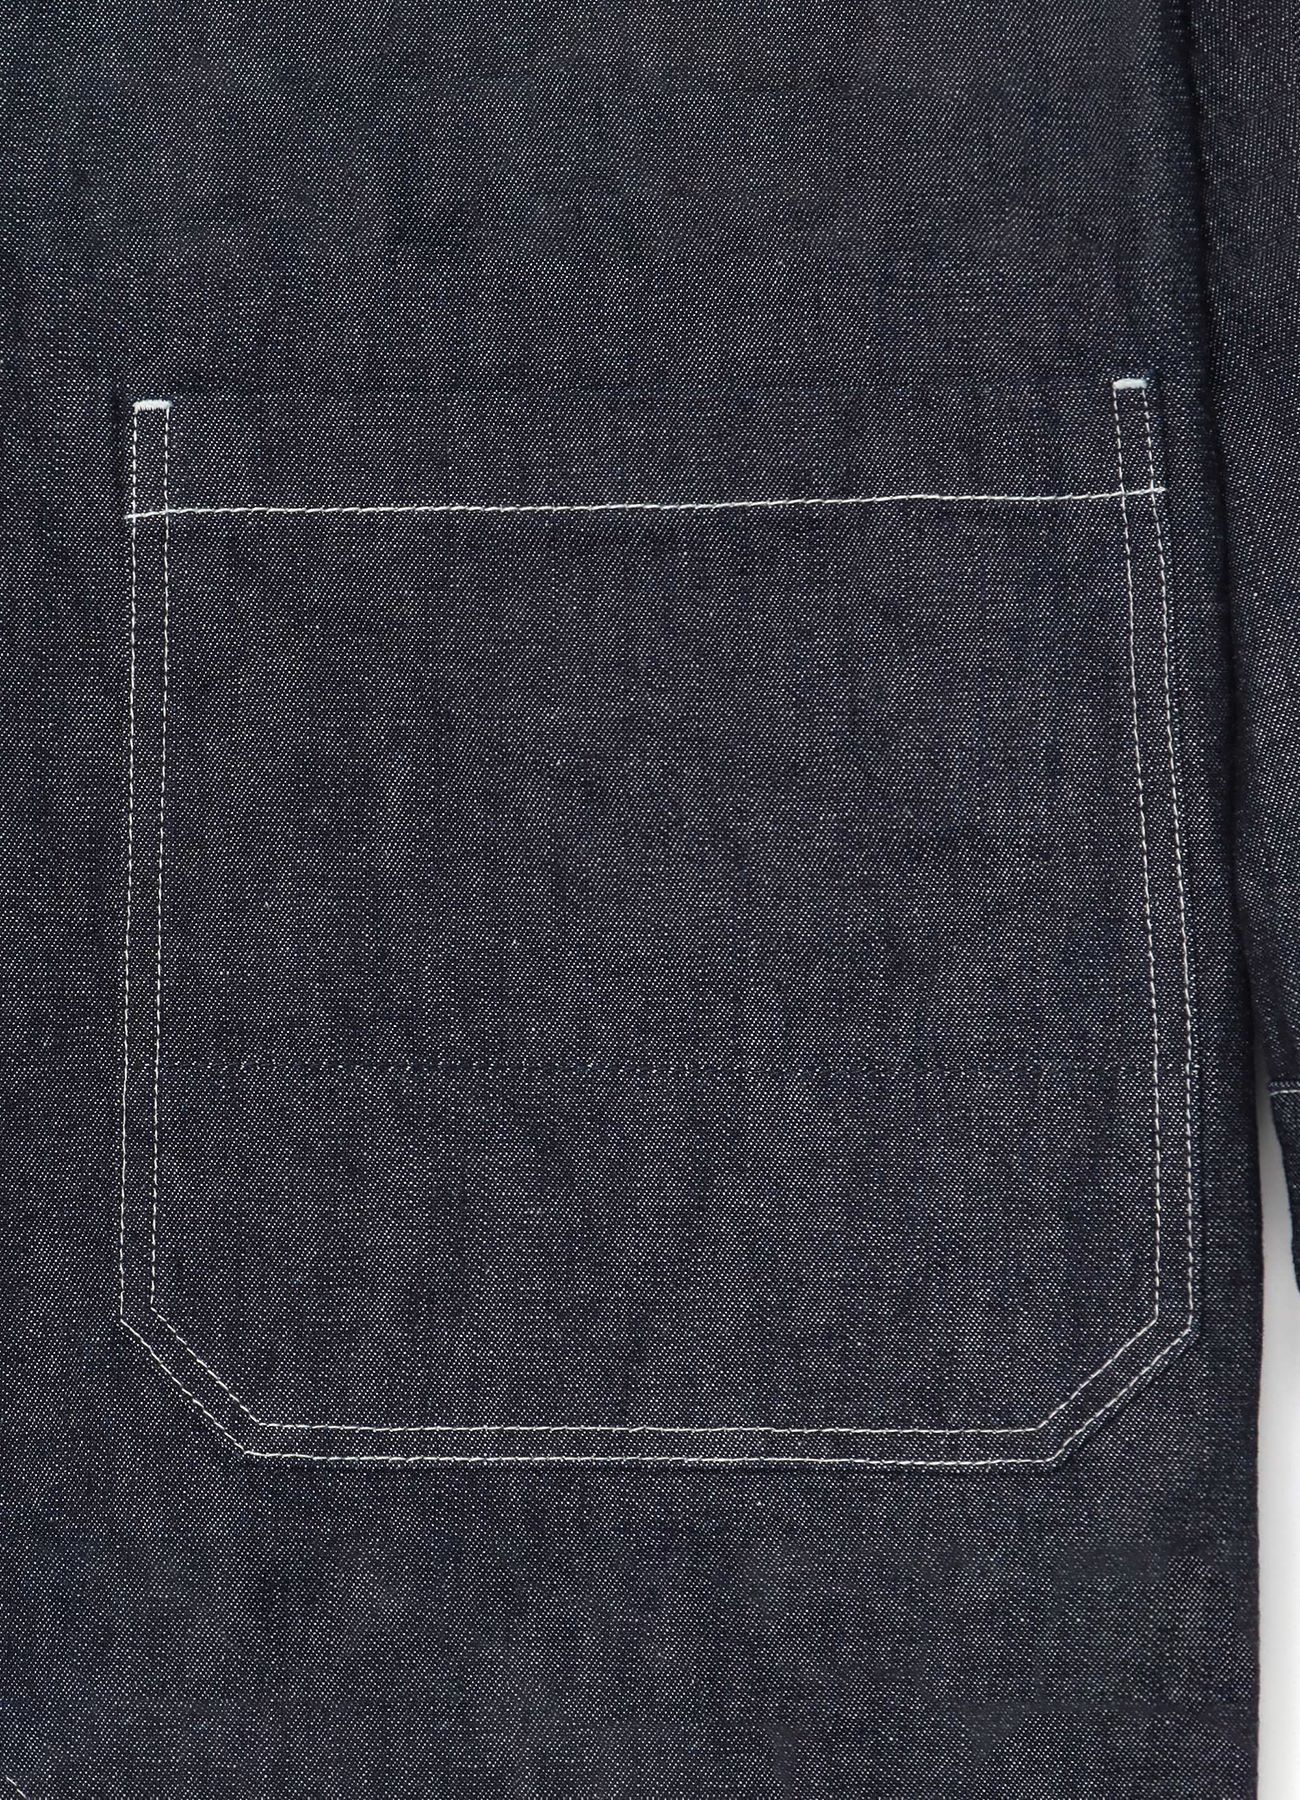 10oz Denim Shirt Jacket with White Stitching